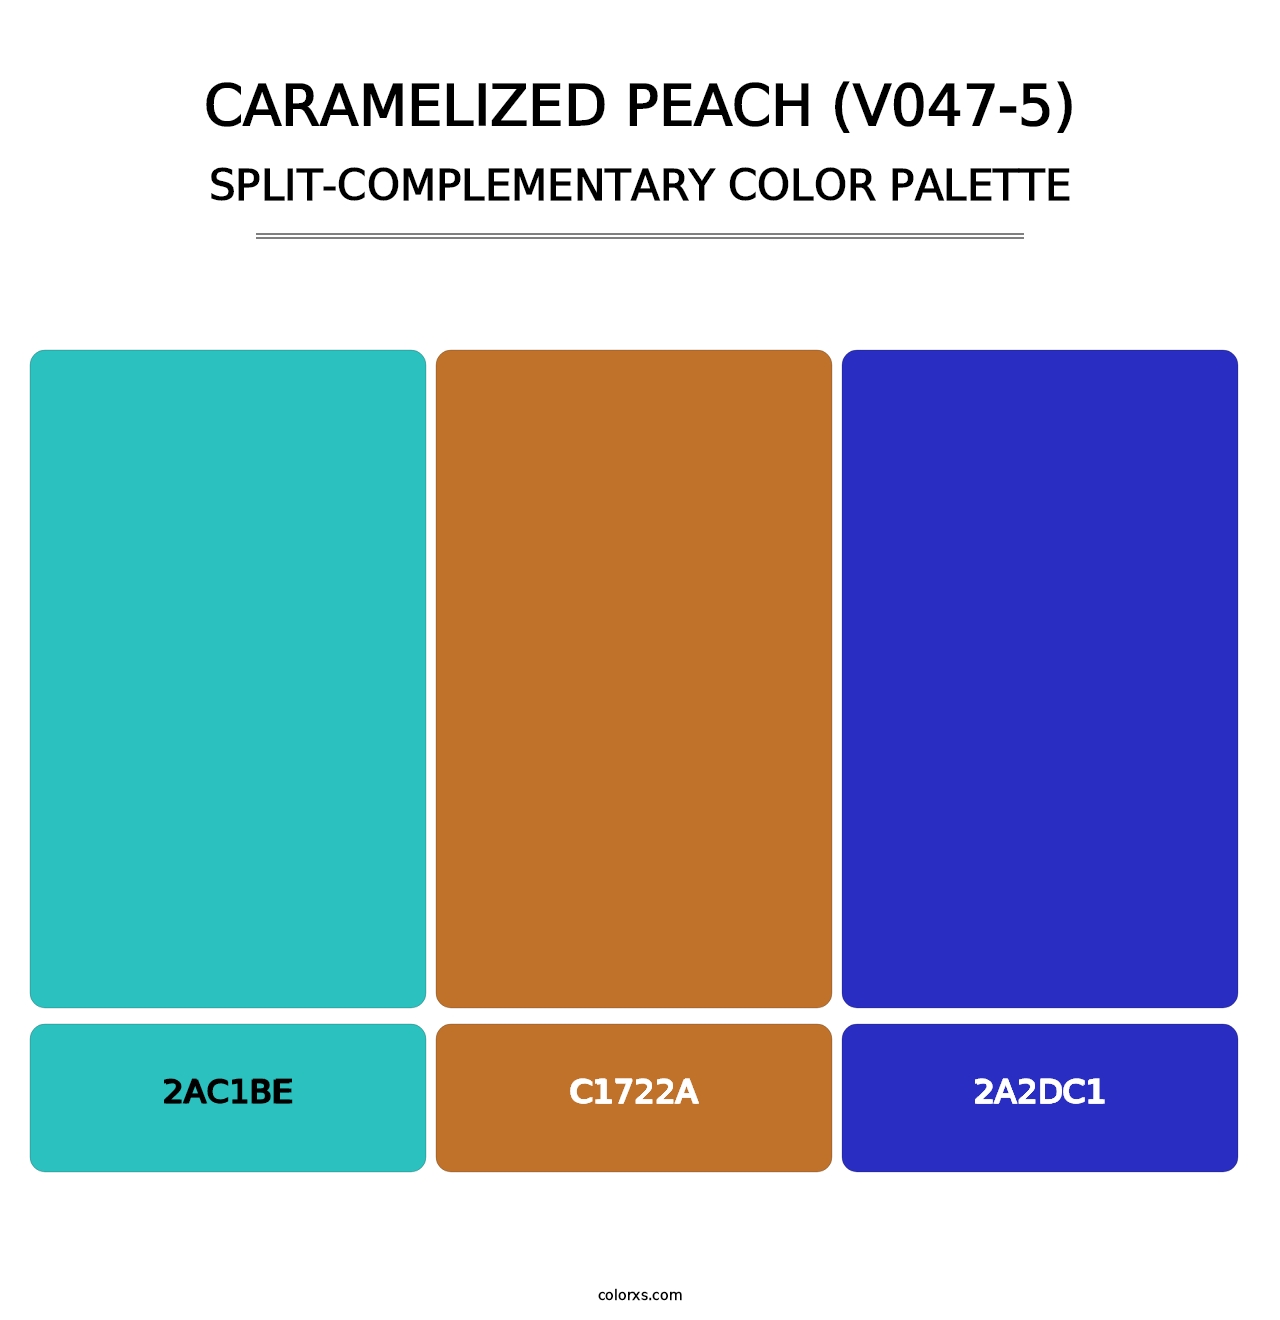 Caramelized Peach (V047-5) - Split-Complementary Color Palette